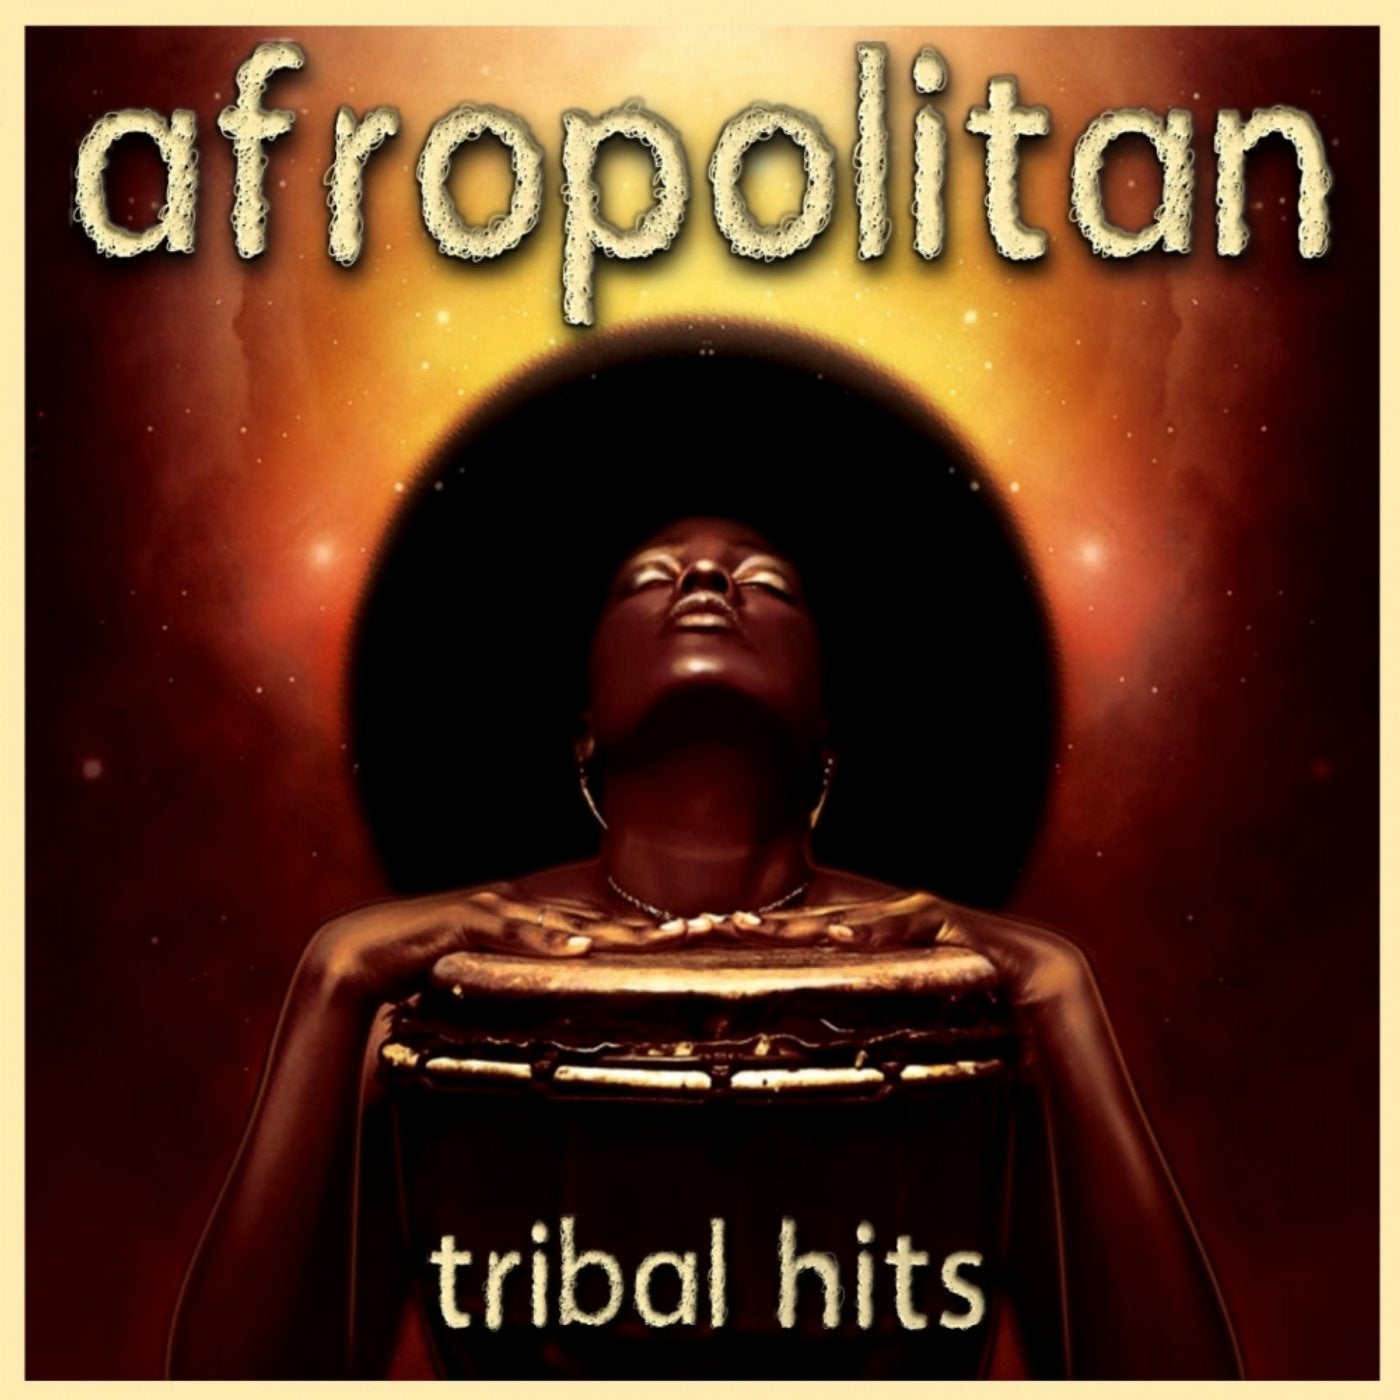 Afropolitan - Tribal Hits